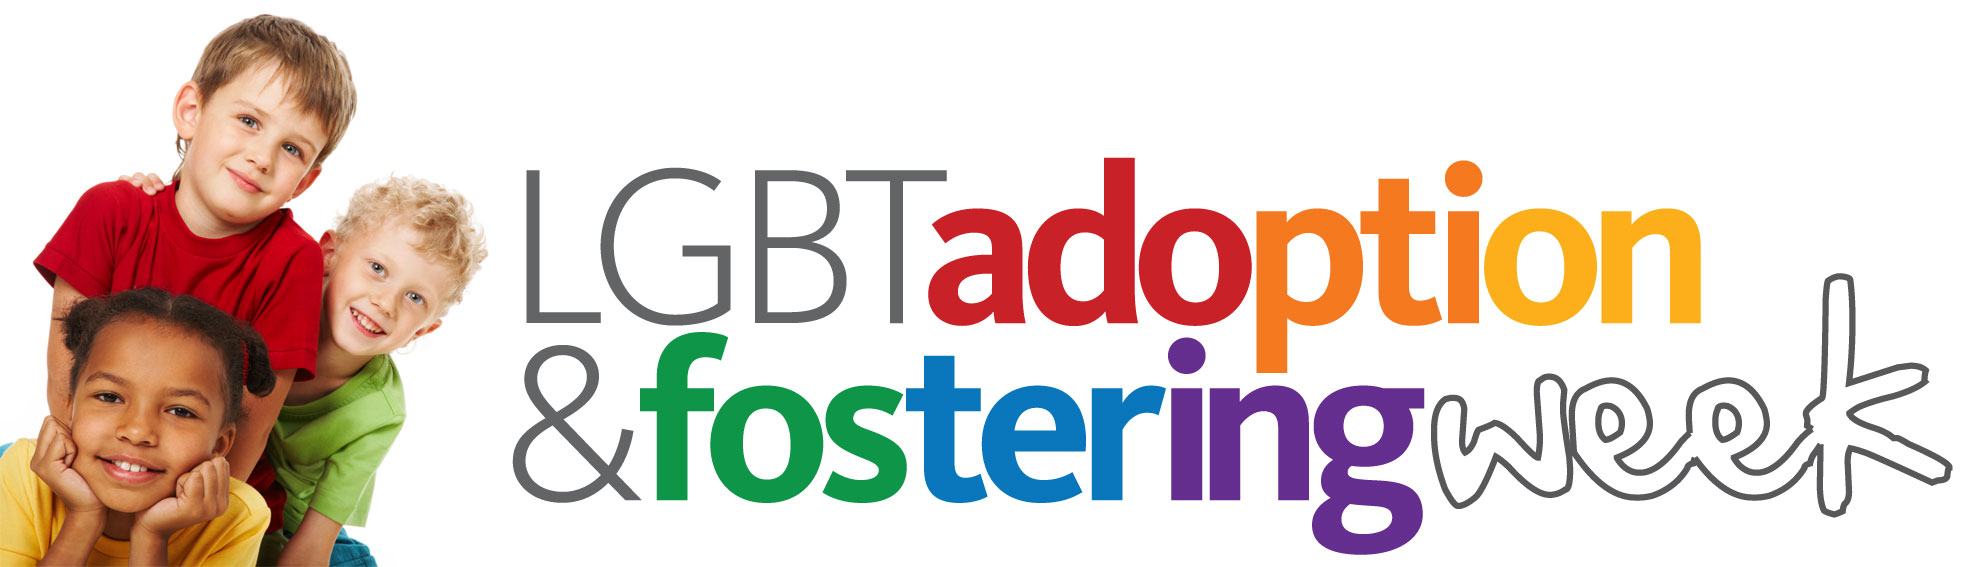 LGBT Adoption & Fostering Week